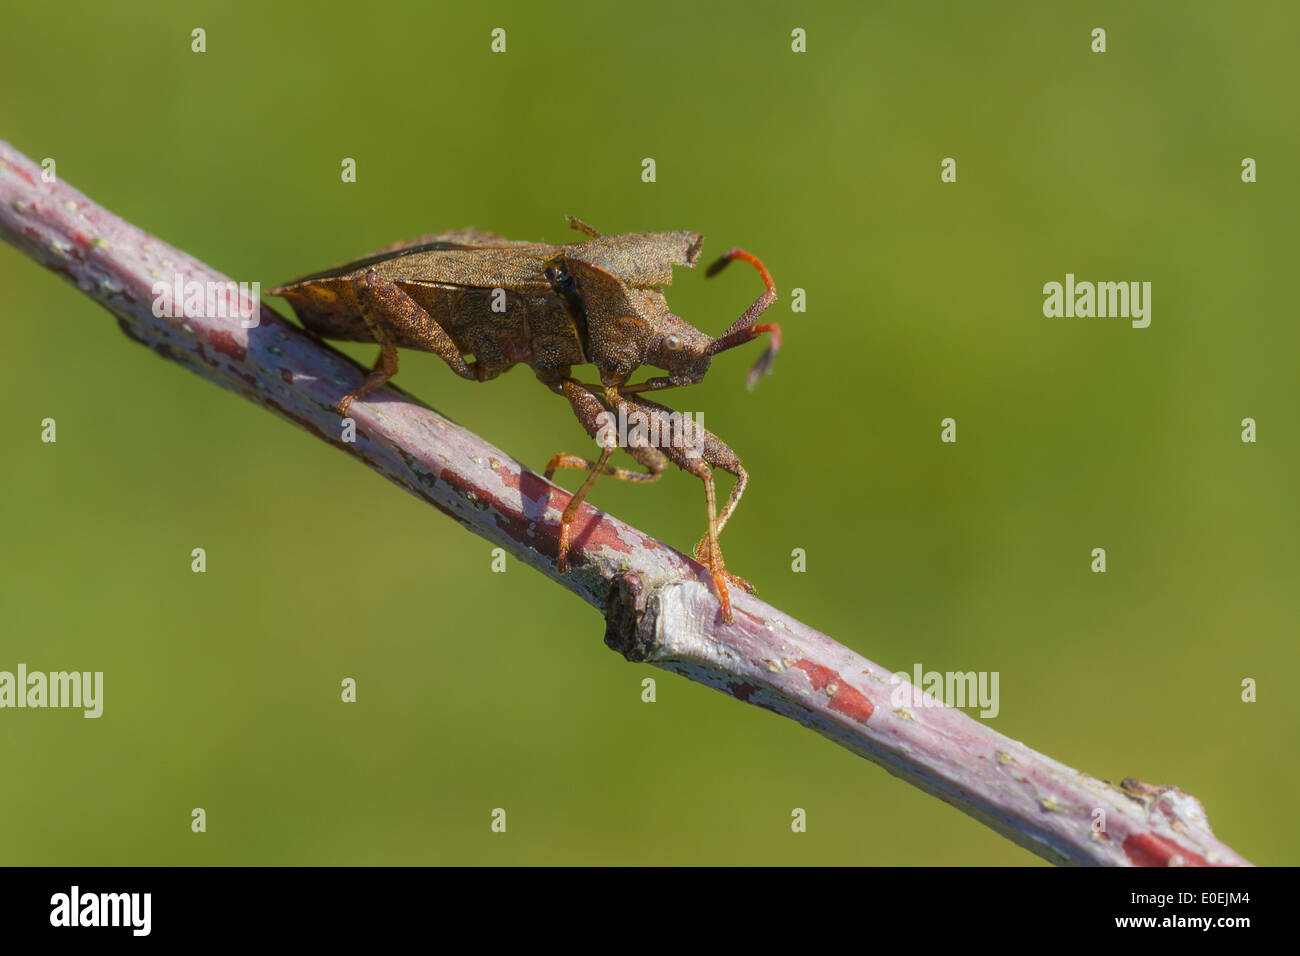 Coreus marginatus beetle walking on a brench. Stock Photo